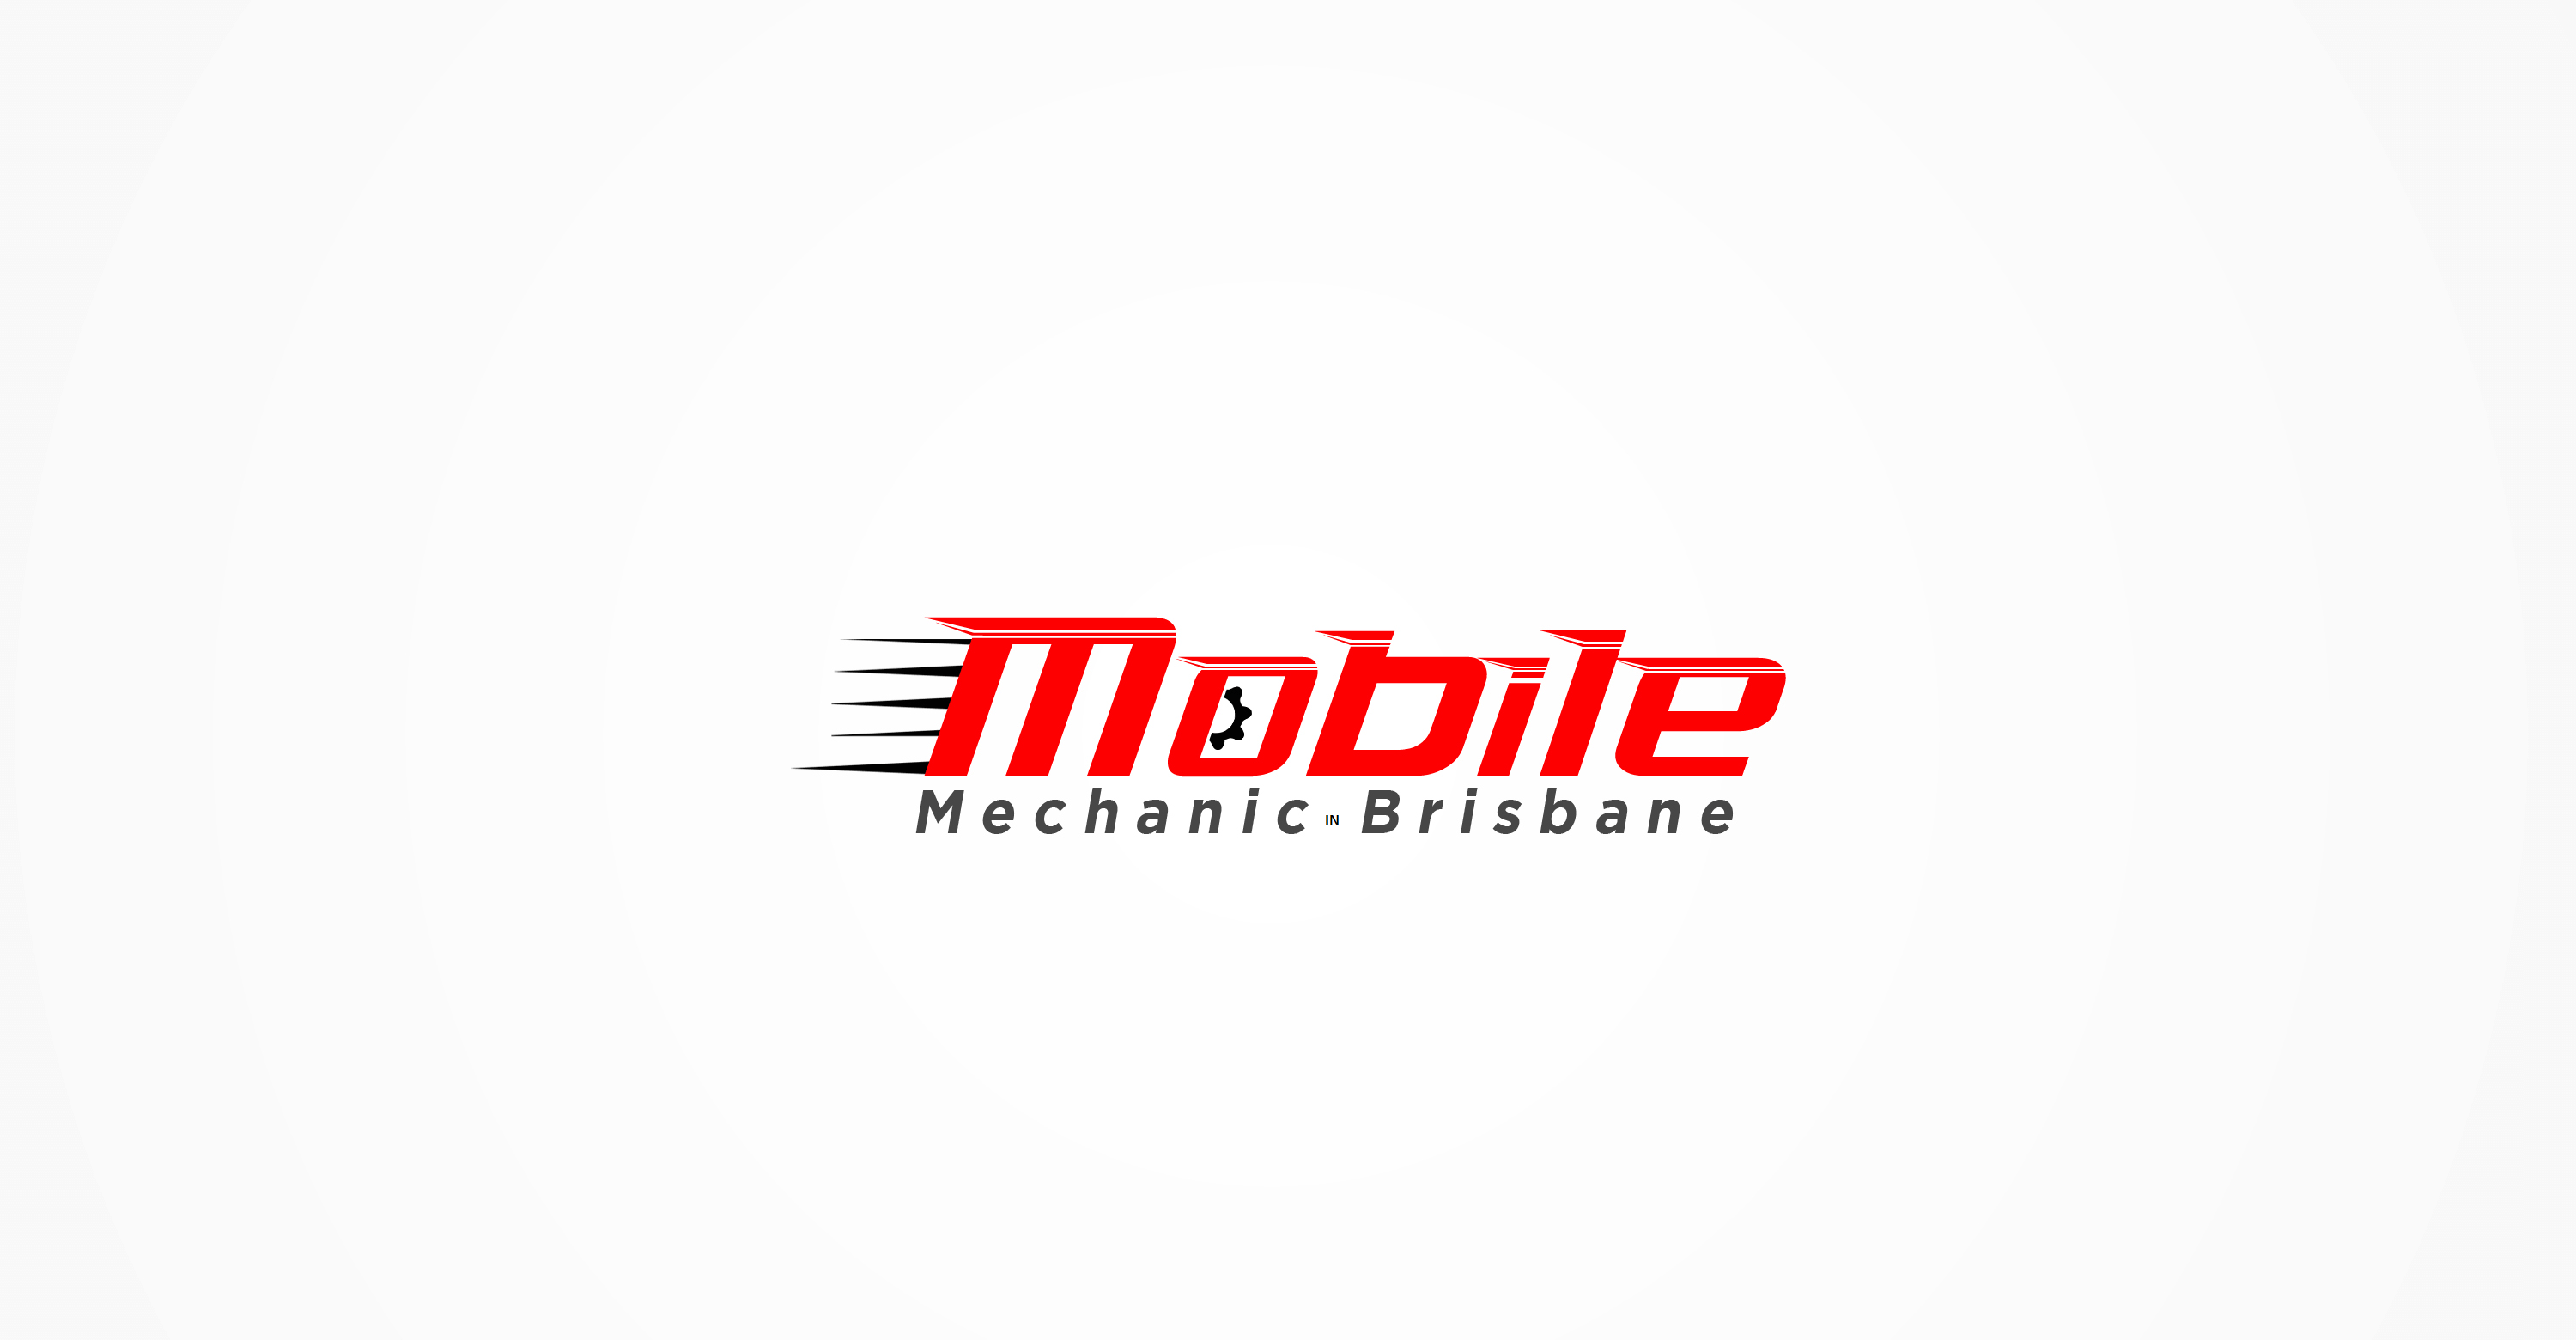 Mobile Mechanic in Brisbane